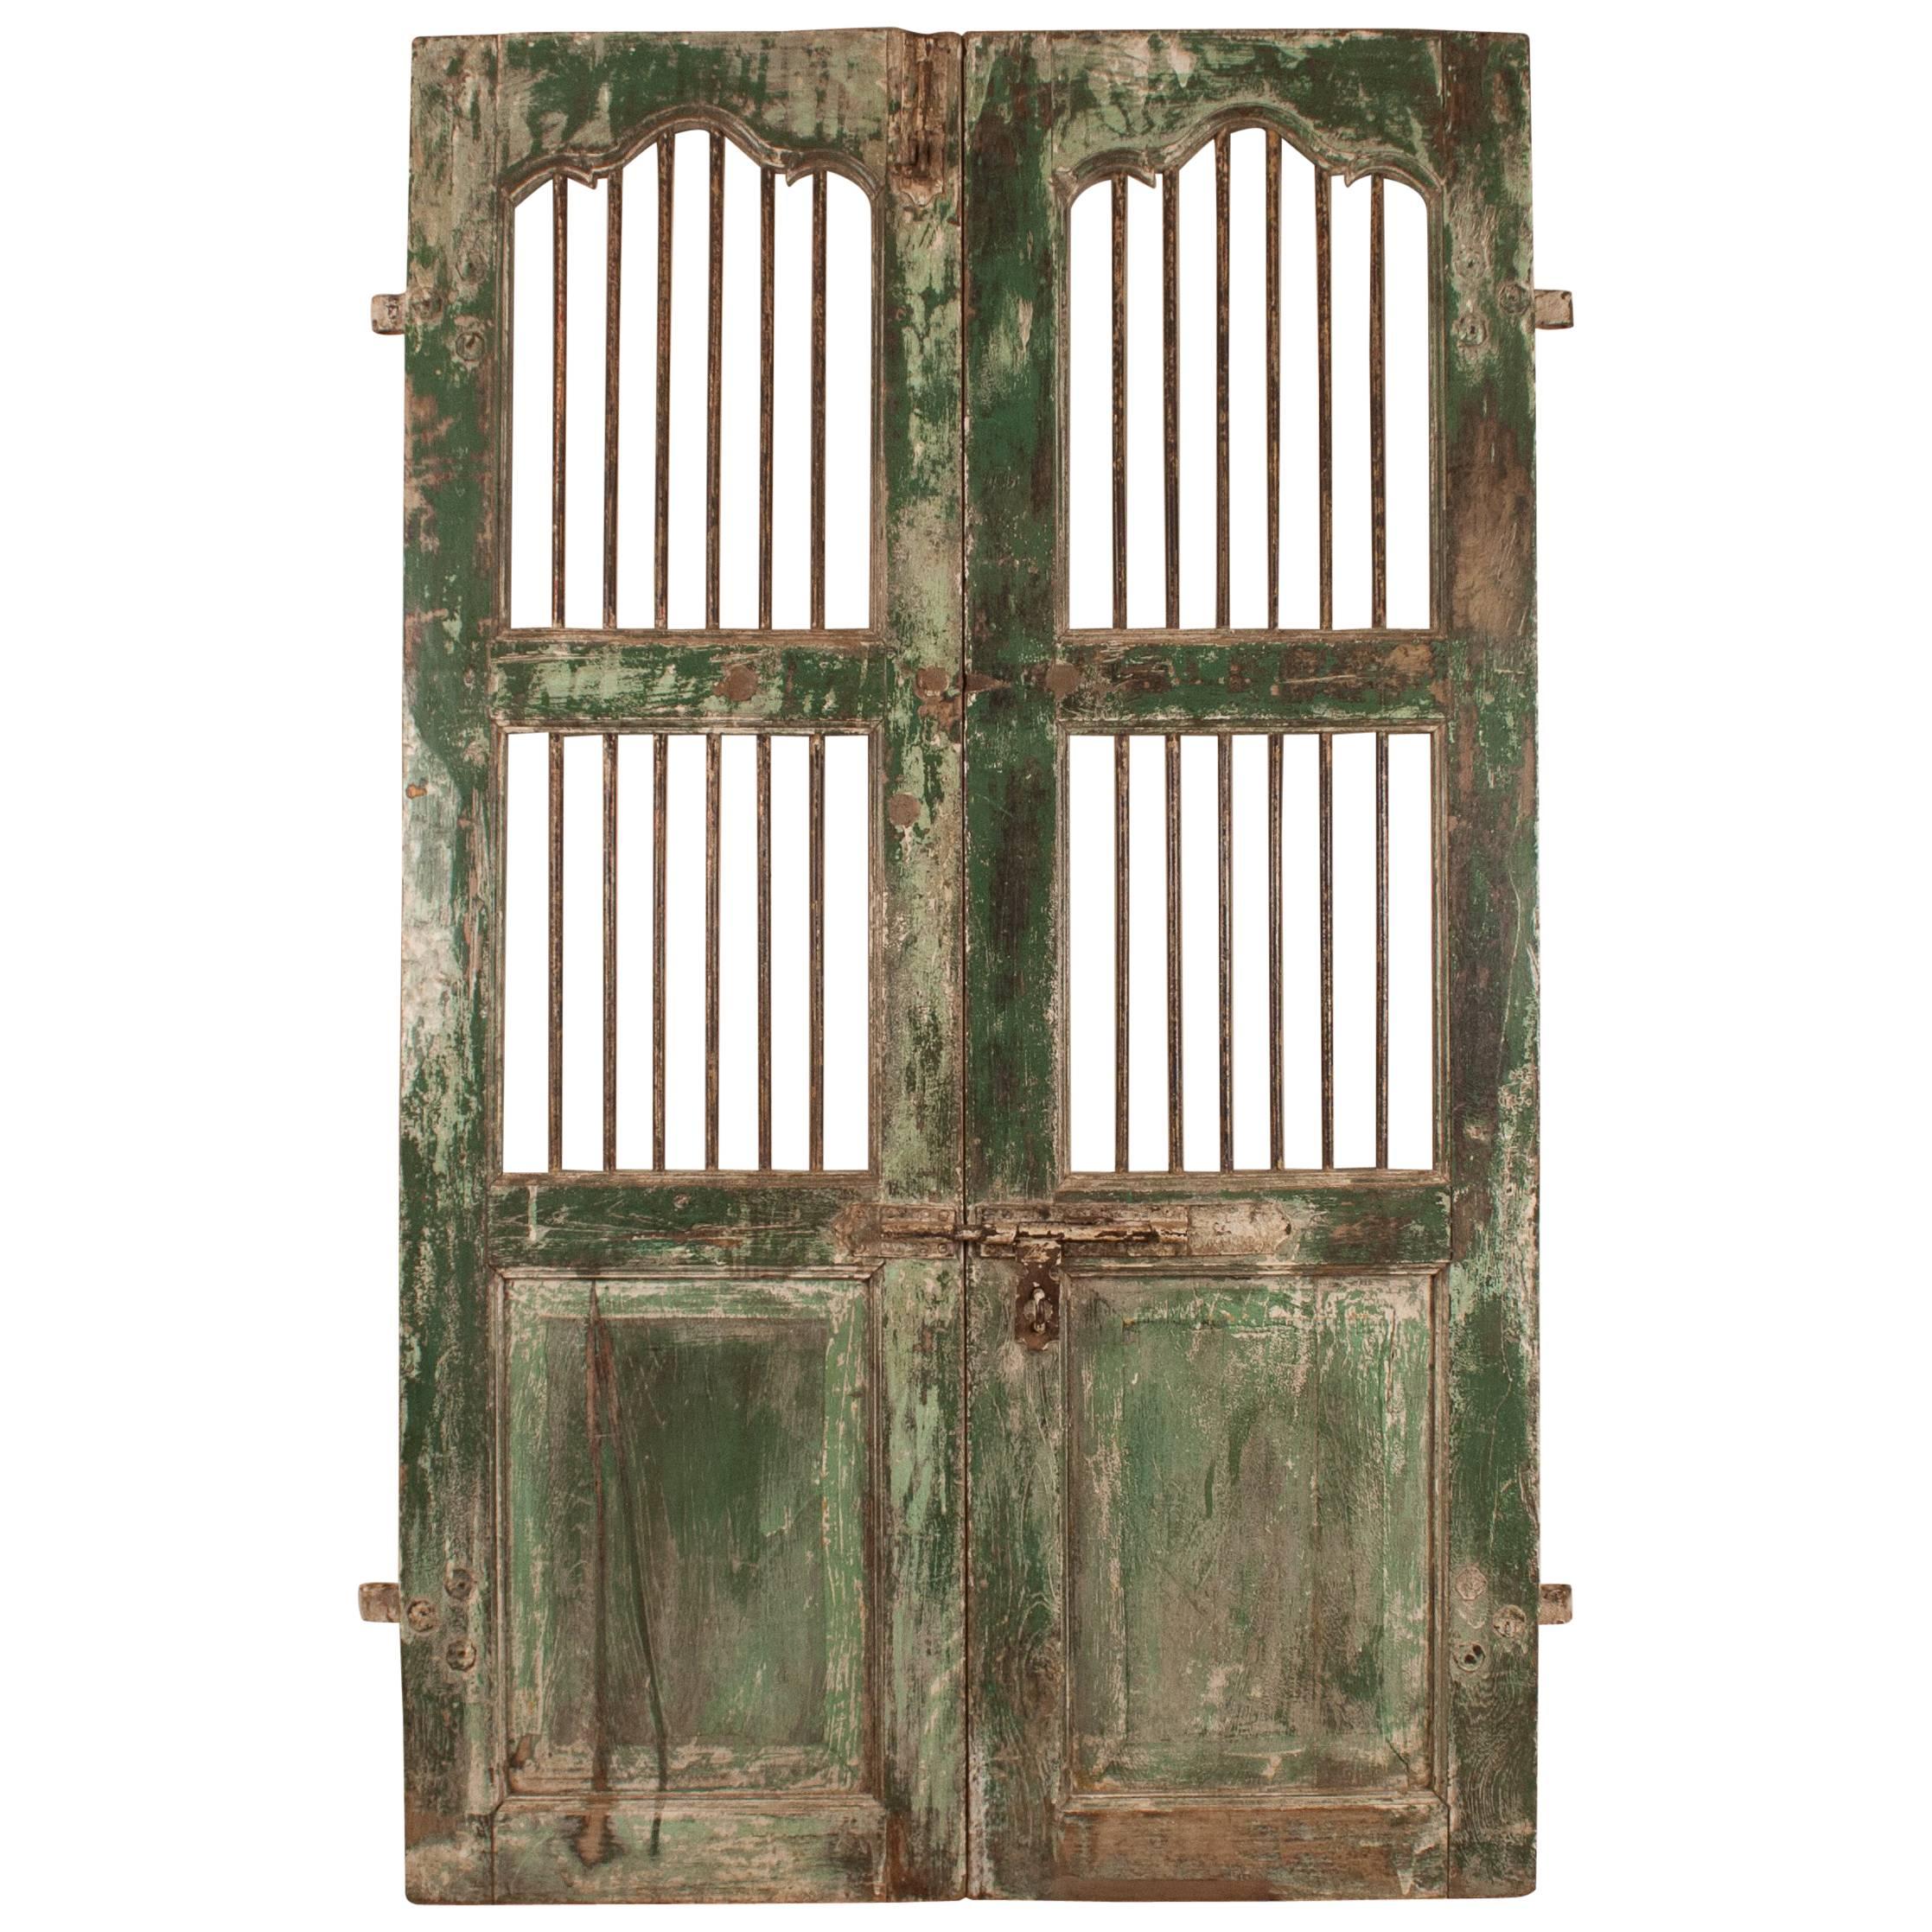 Teak Wood and Iron Courtyard Gate or Doors